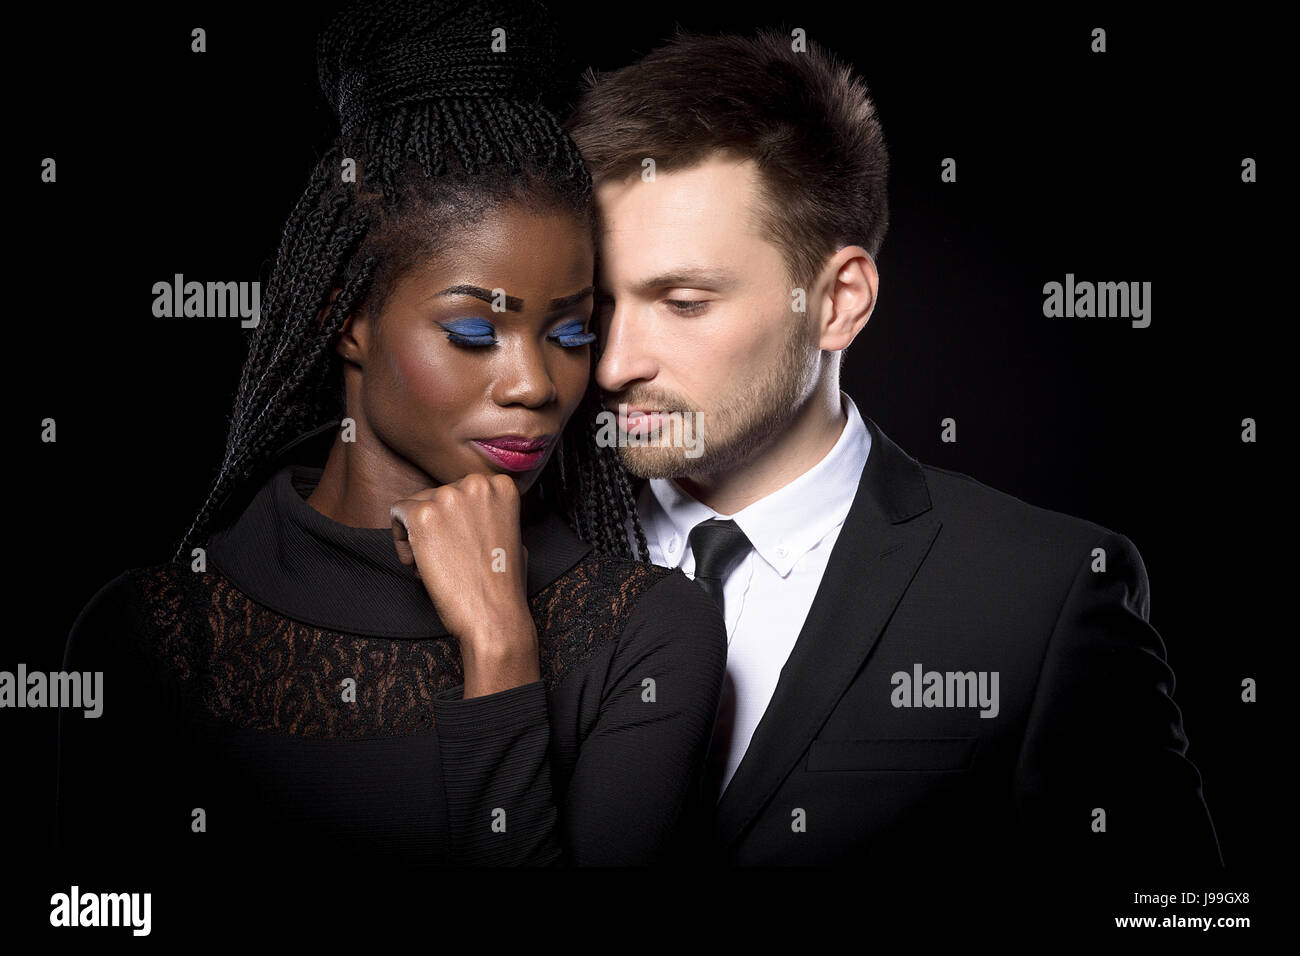 Close up portrait of romantic multi-ethnic couple on black background. Stock Photo